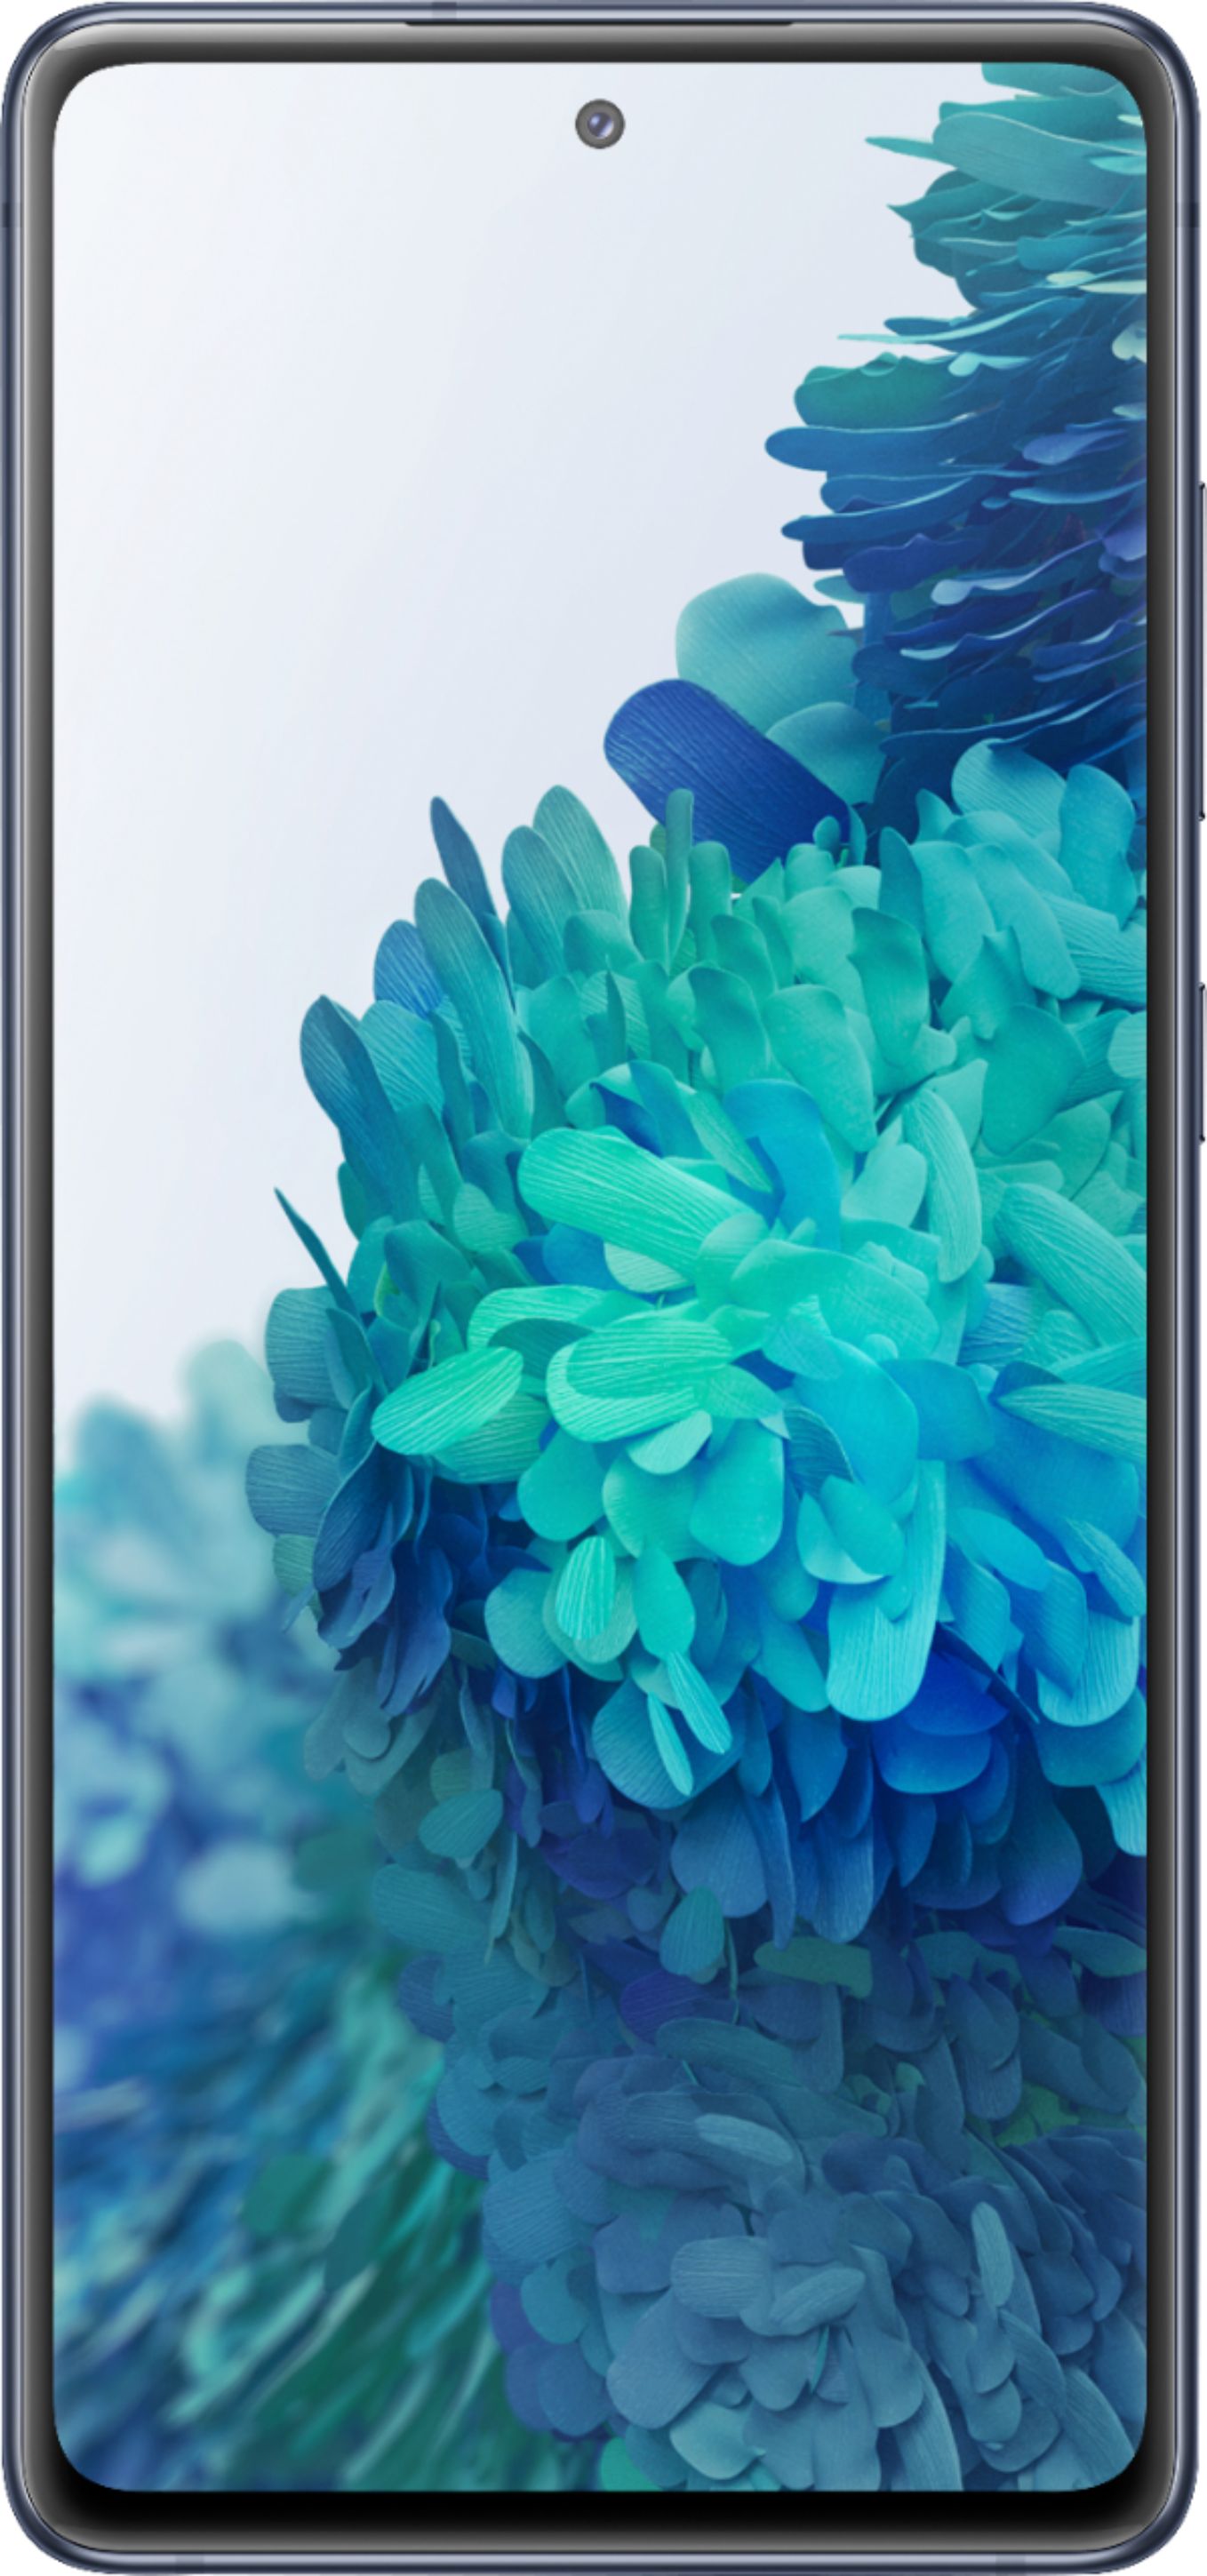  Samsung Galaxy S20 5G, 128GB, Cloud Pink - Unlocked (Renewed)